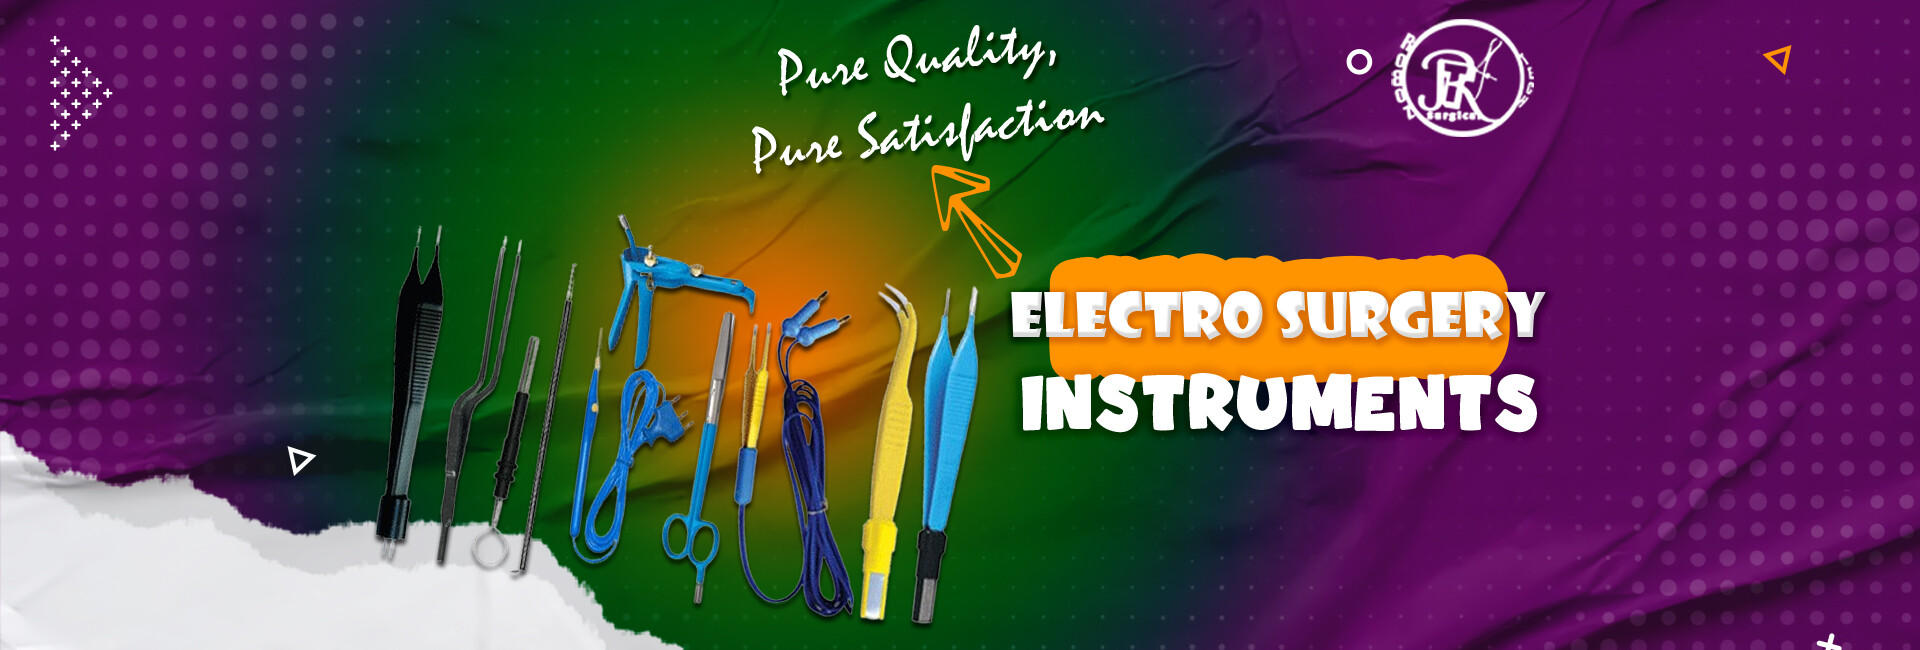 Electrosurgery instruments psd